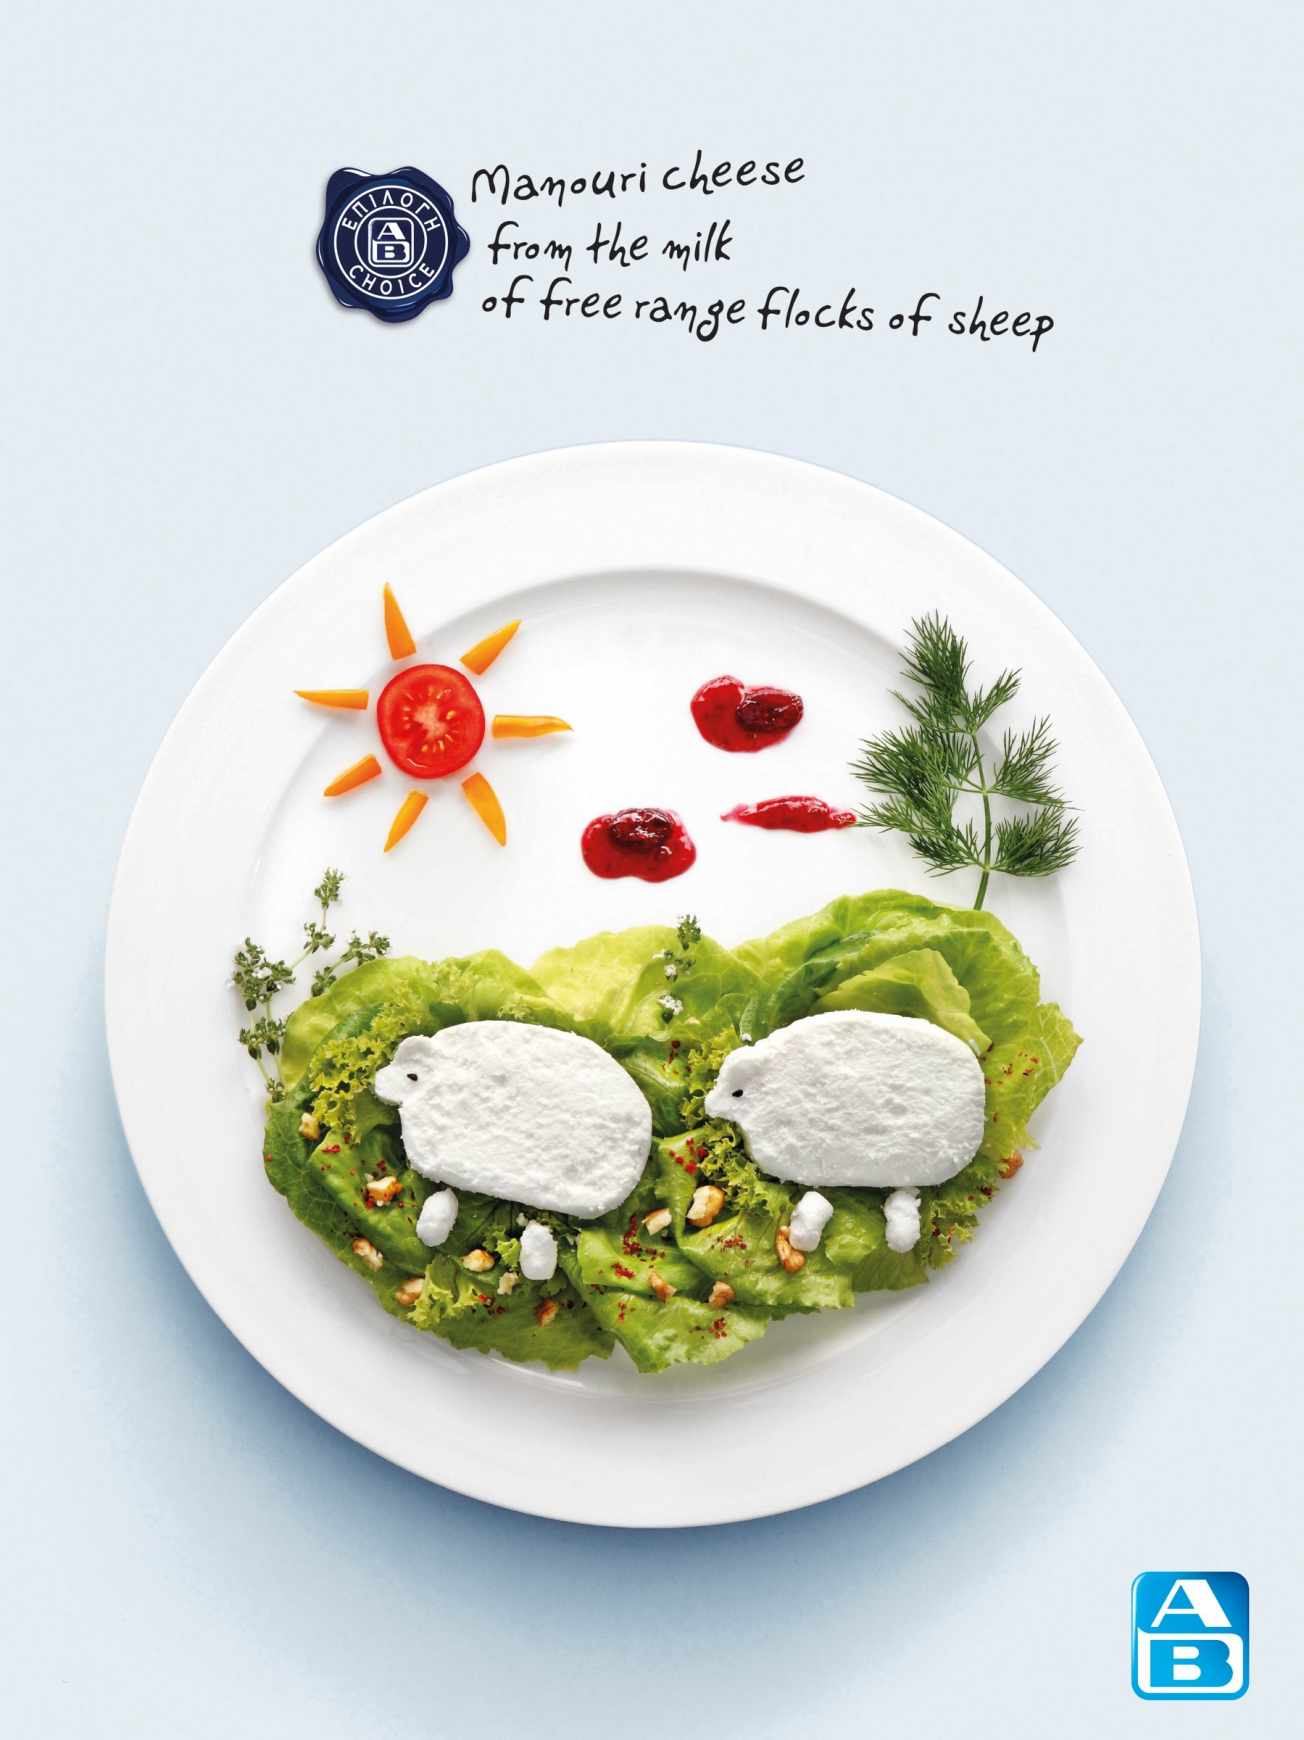 希腊AB Vasilopoulos超市平面广告设计